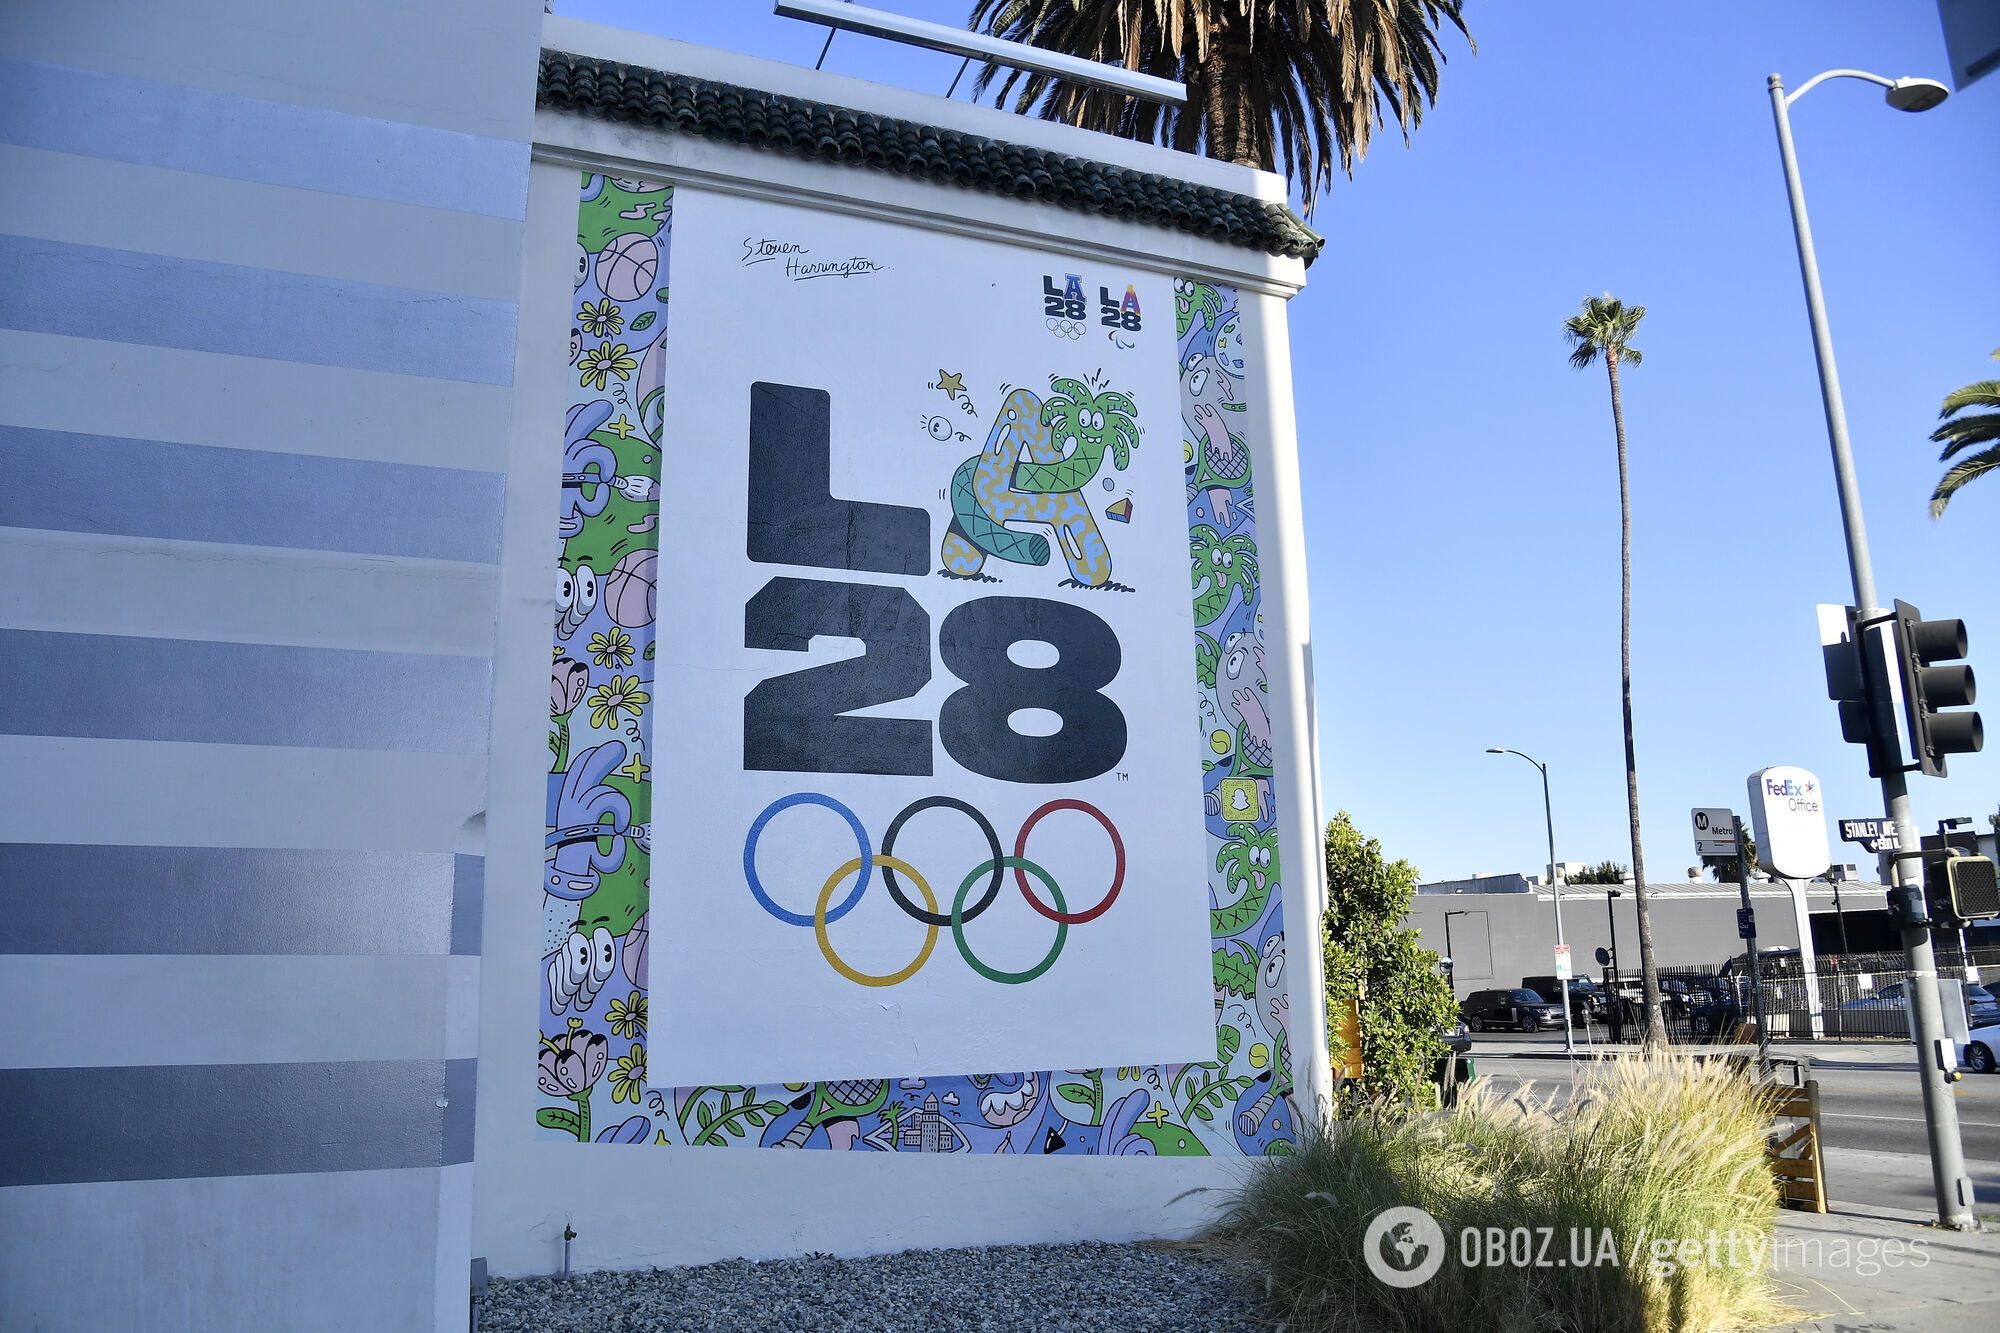 Олимпиада-2028 пройдет в Лос-Анджелесе.